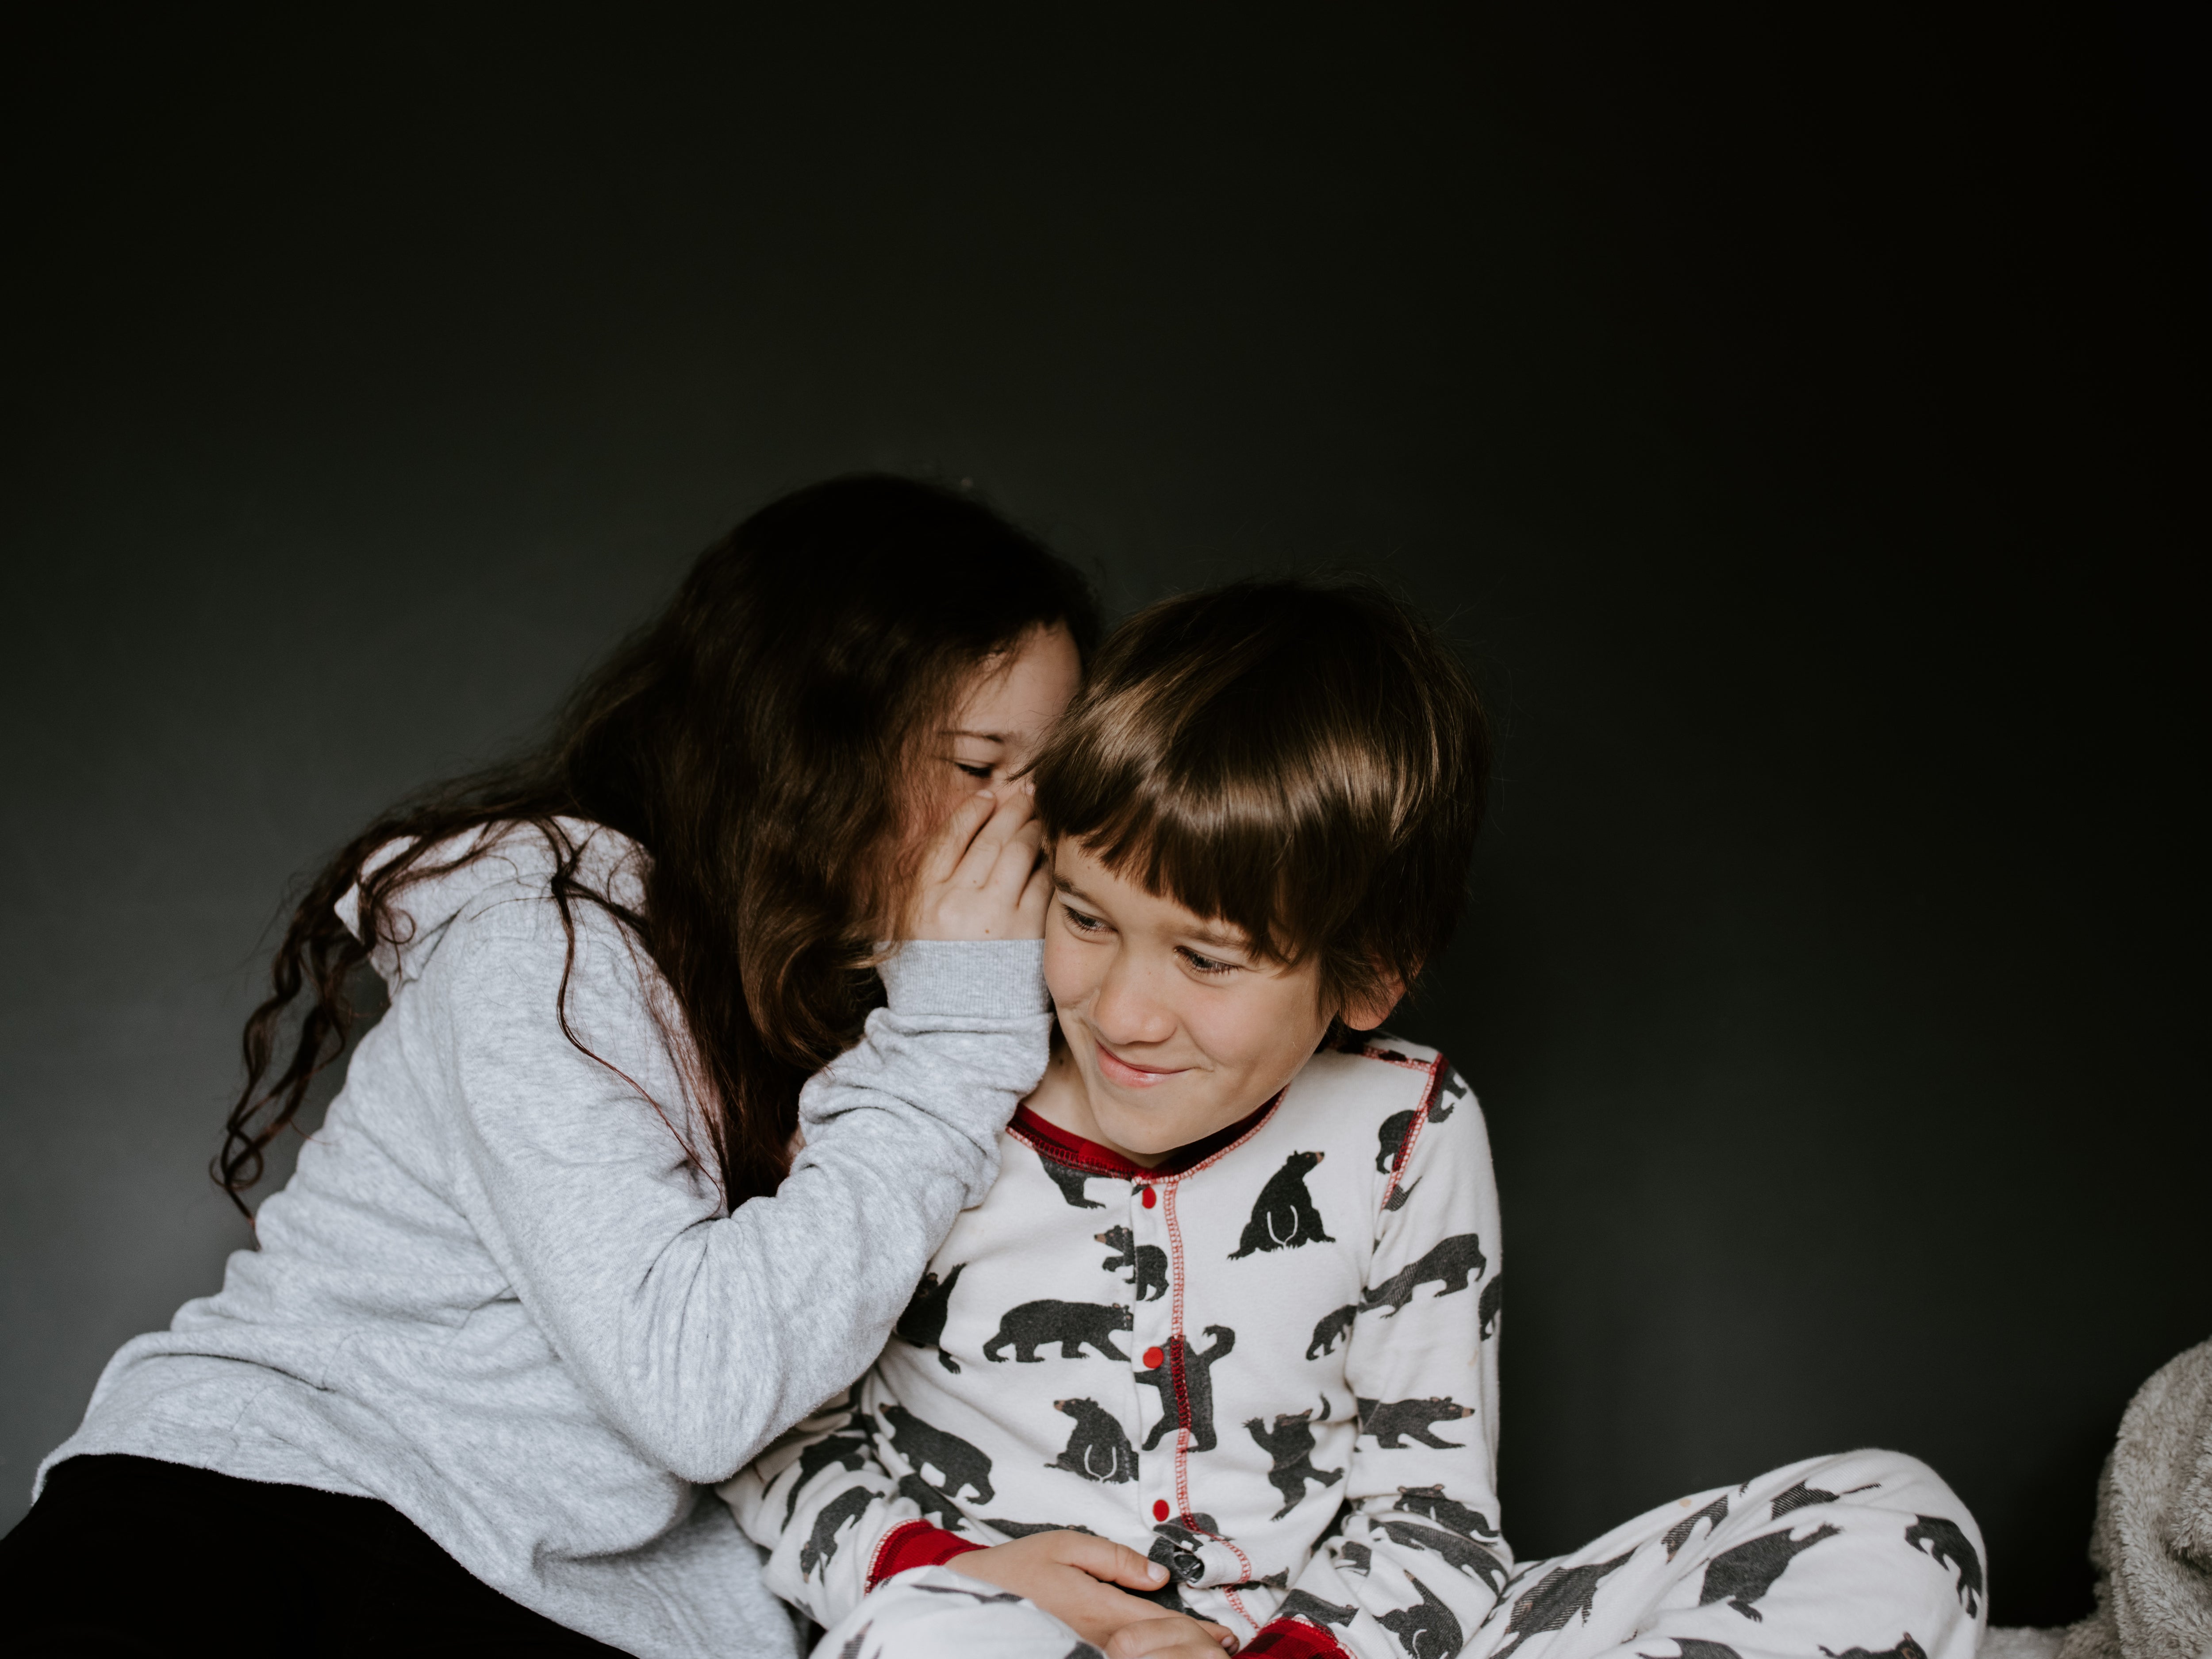 Older Sister Sharing Secret with Little Brother in Pyjamas